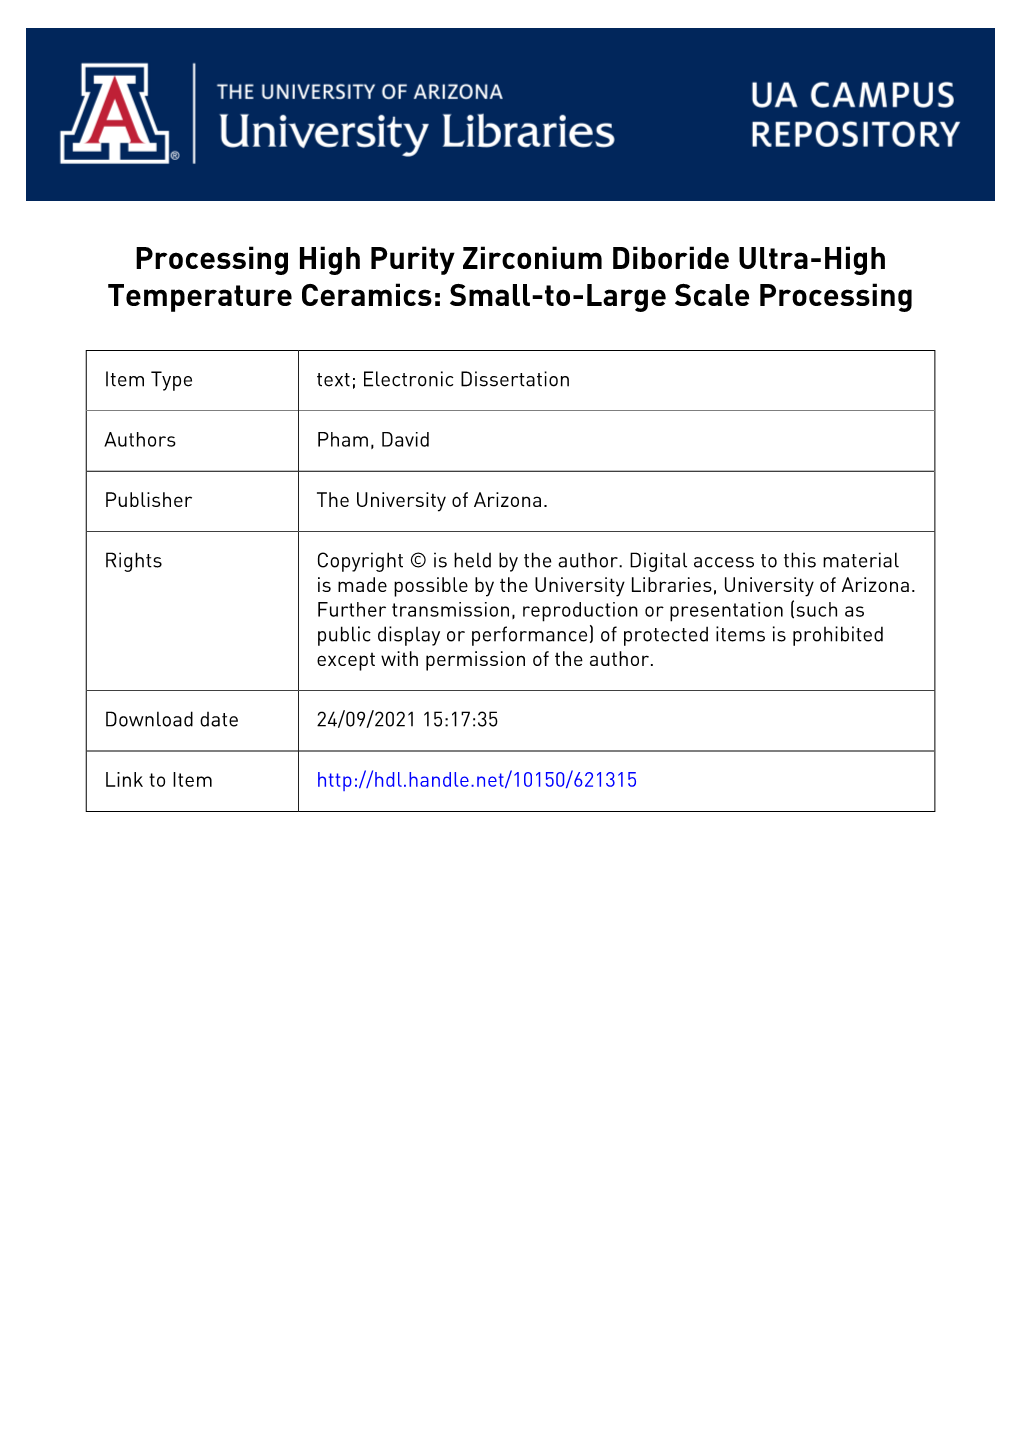 Processing High Purity Zirconium Diboride Ultra-High Temperature Ceramics: Small-To-Large Scale Processing